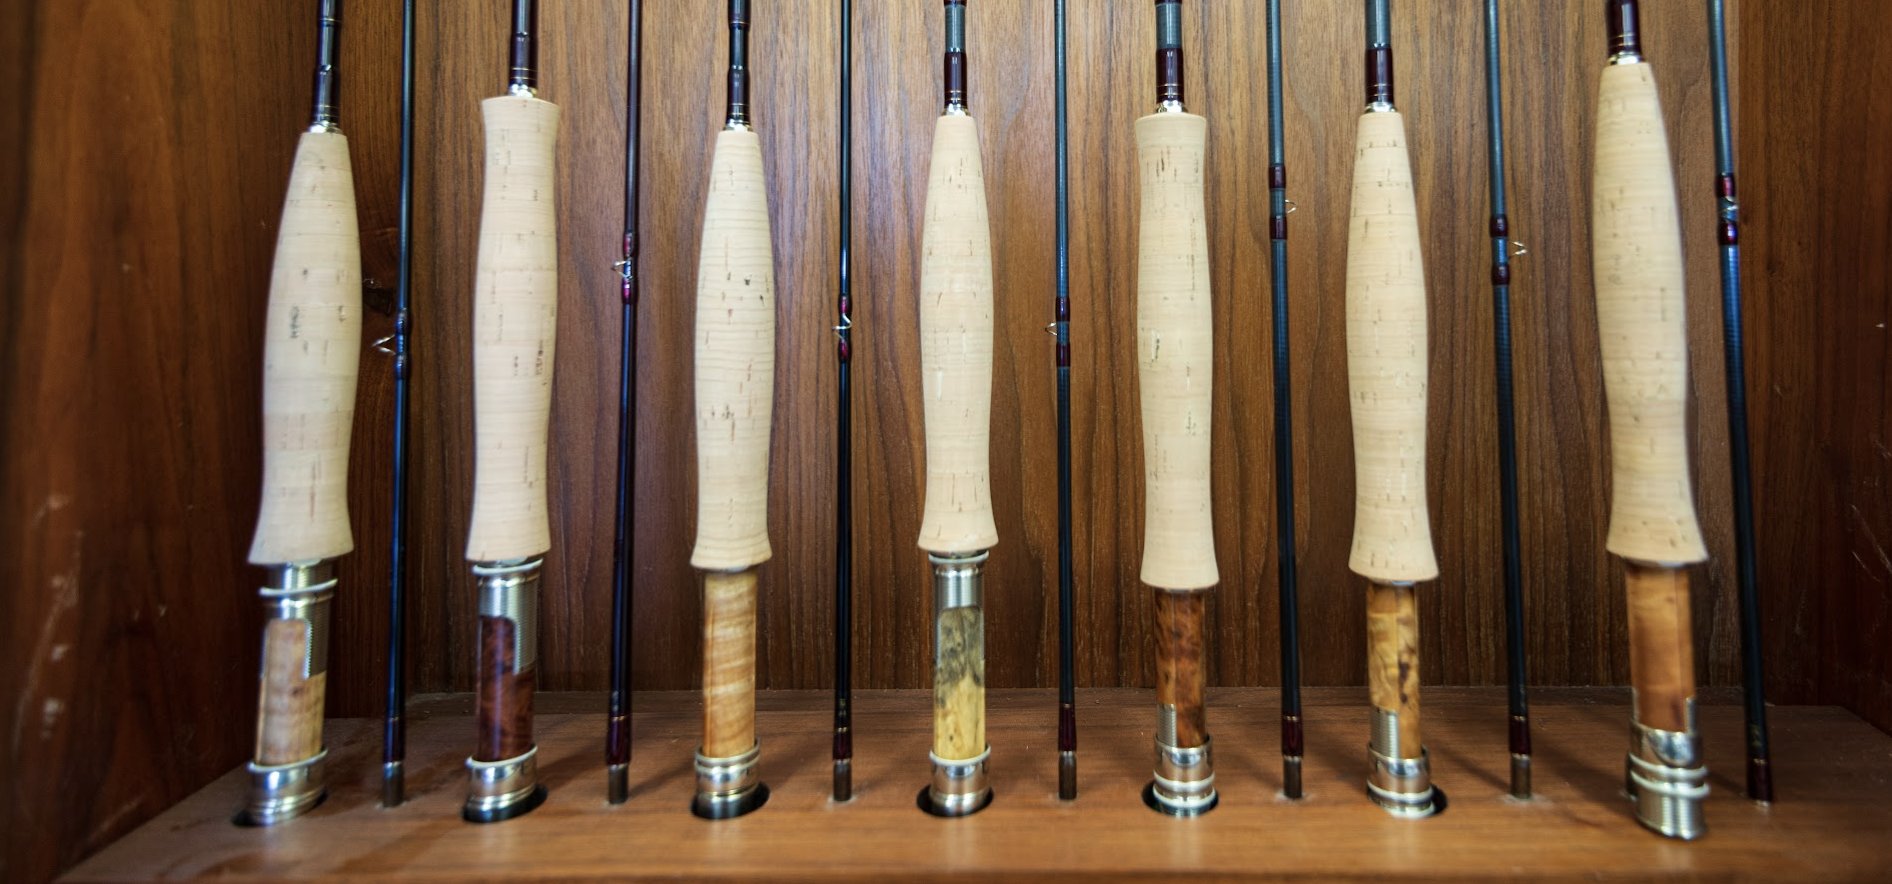 Custom Bamboo Fly Rods by Tom Morgan Rodsmiths